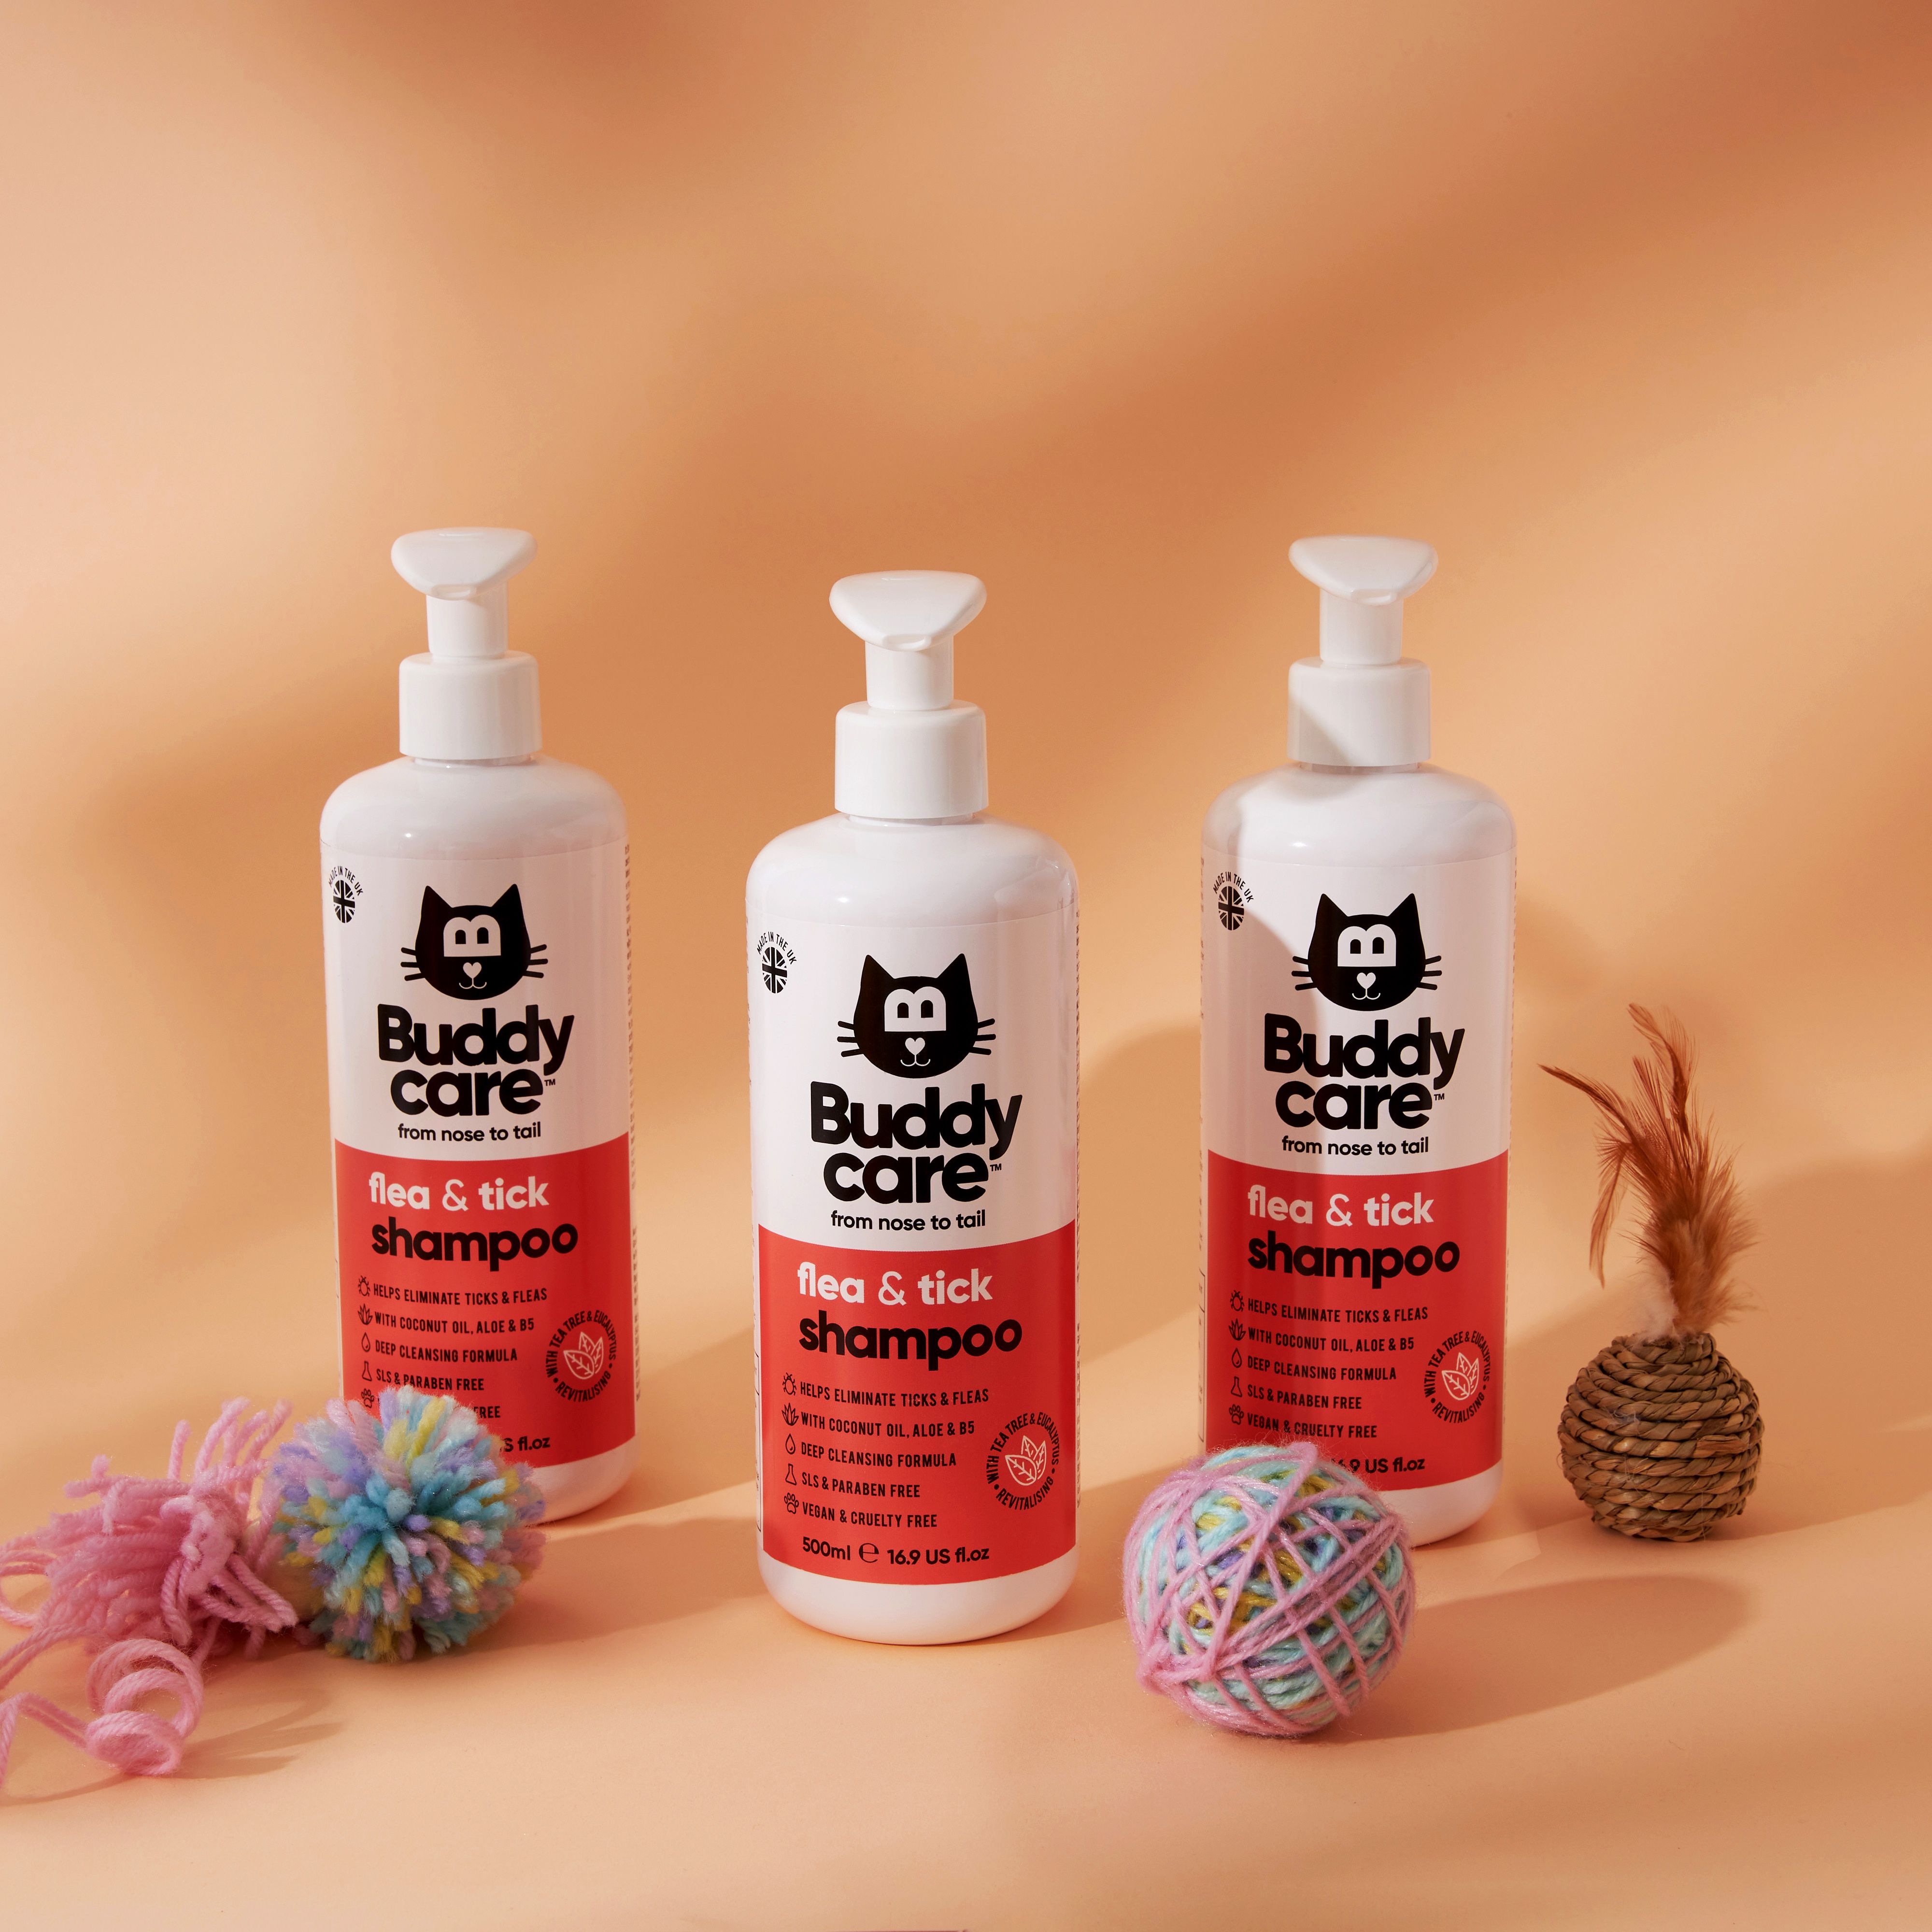 Buddycare Flea & Tick Cat Shampoo 500ml